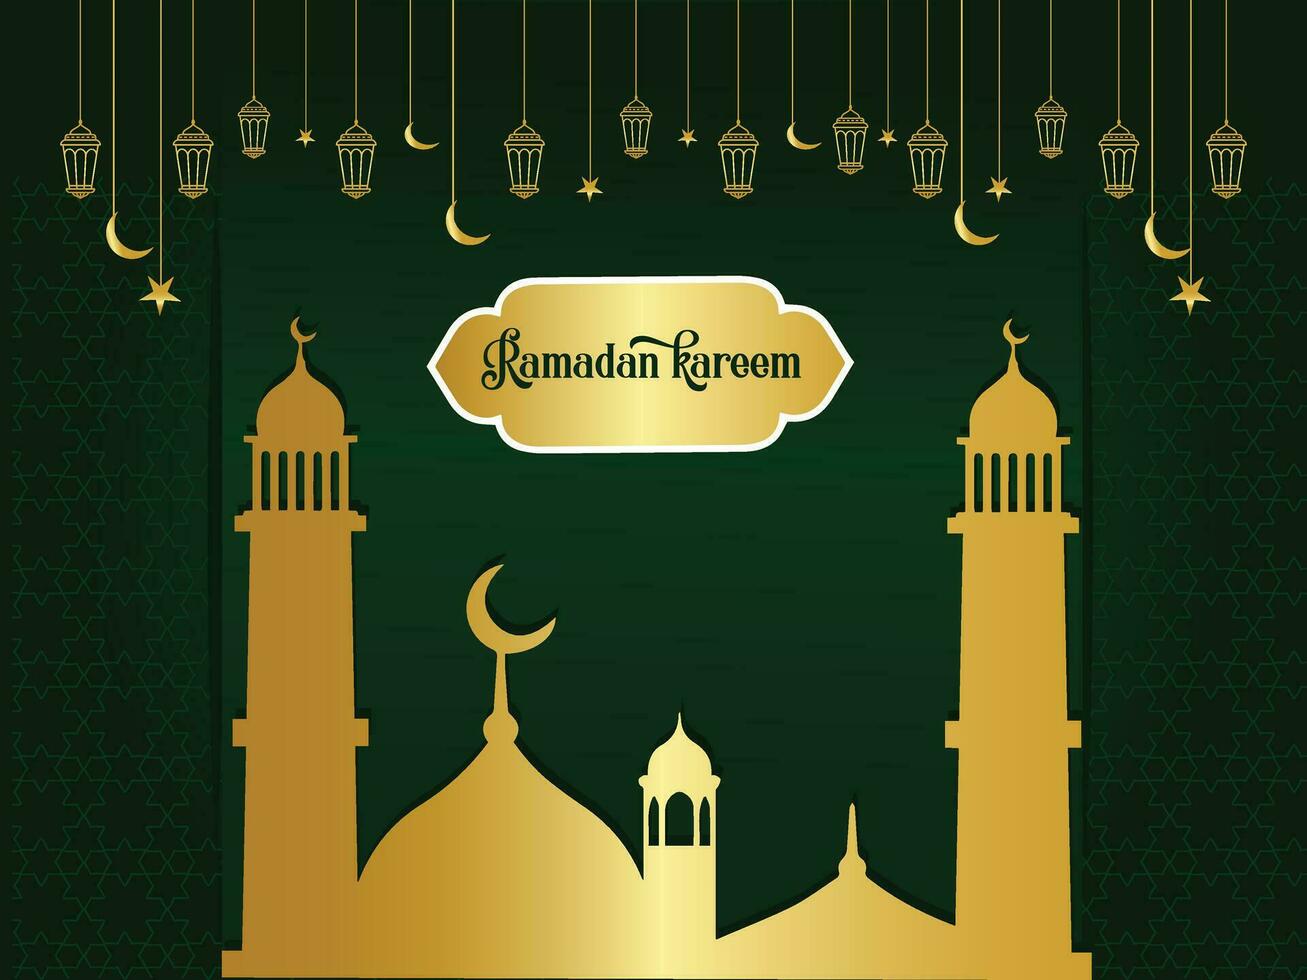 gratuito vettore Ramadan kareem saluto carta adatto per design elemento di Ramadan kareem saluto modello.